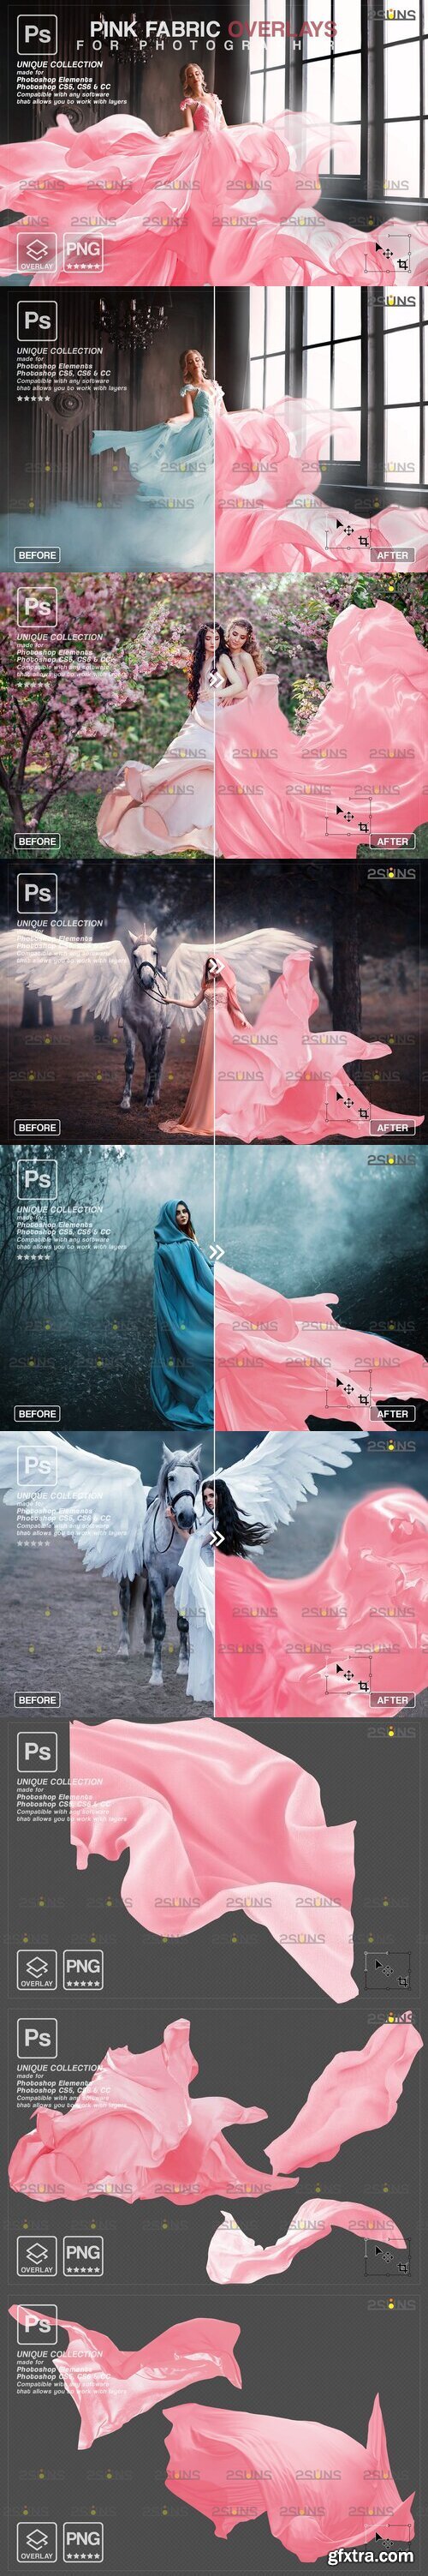 CreativeMarket - Pink flying fabric photoshop overlay 7394420